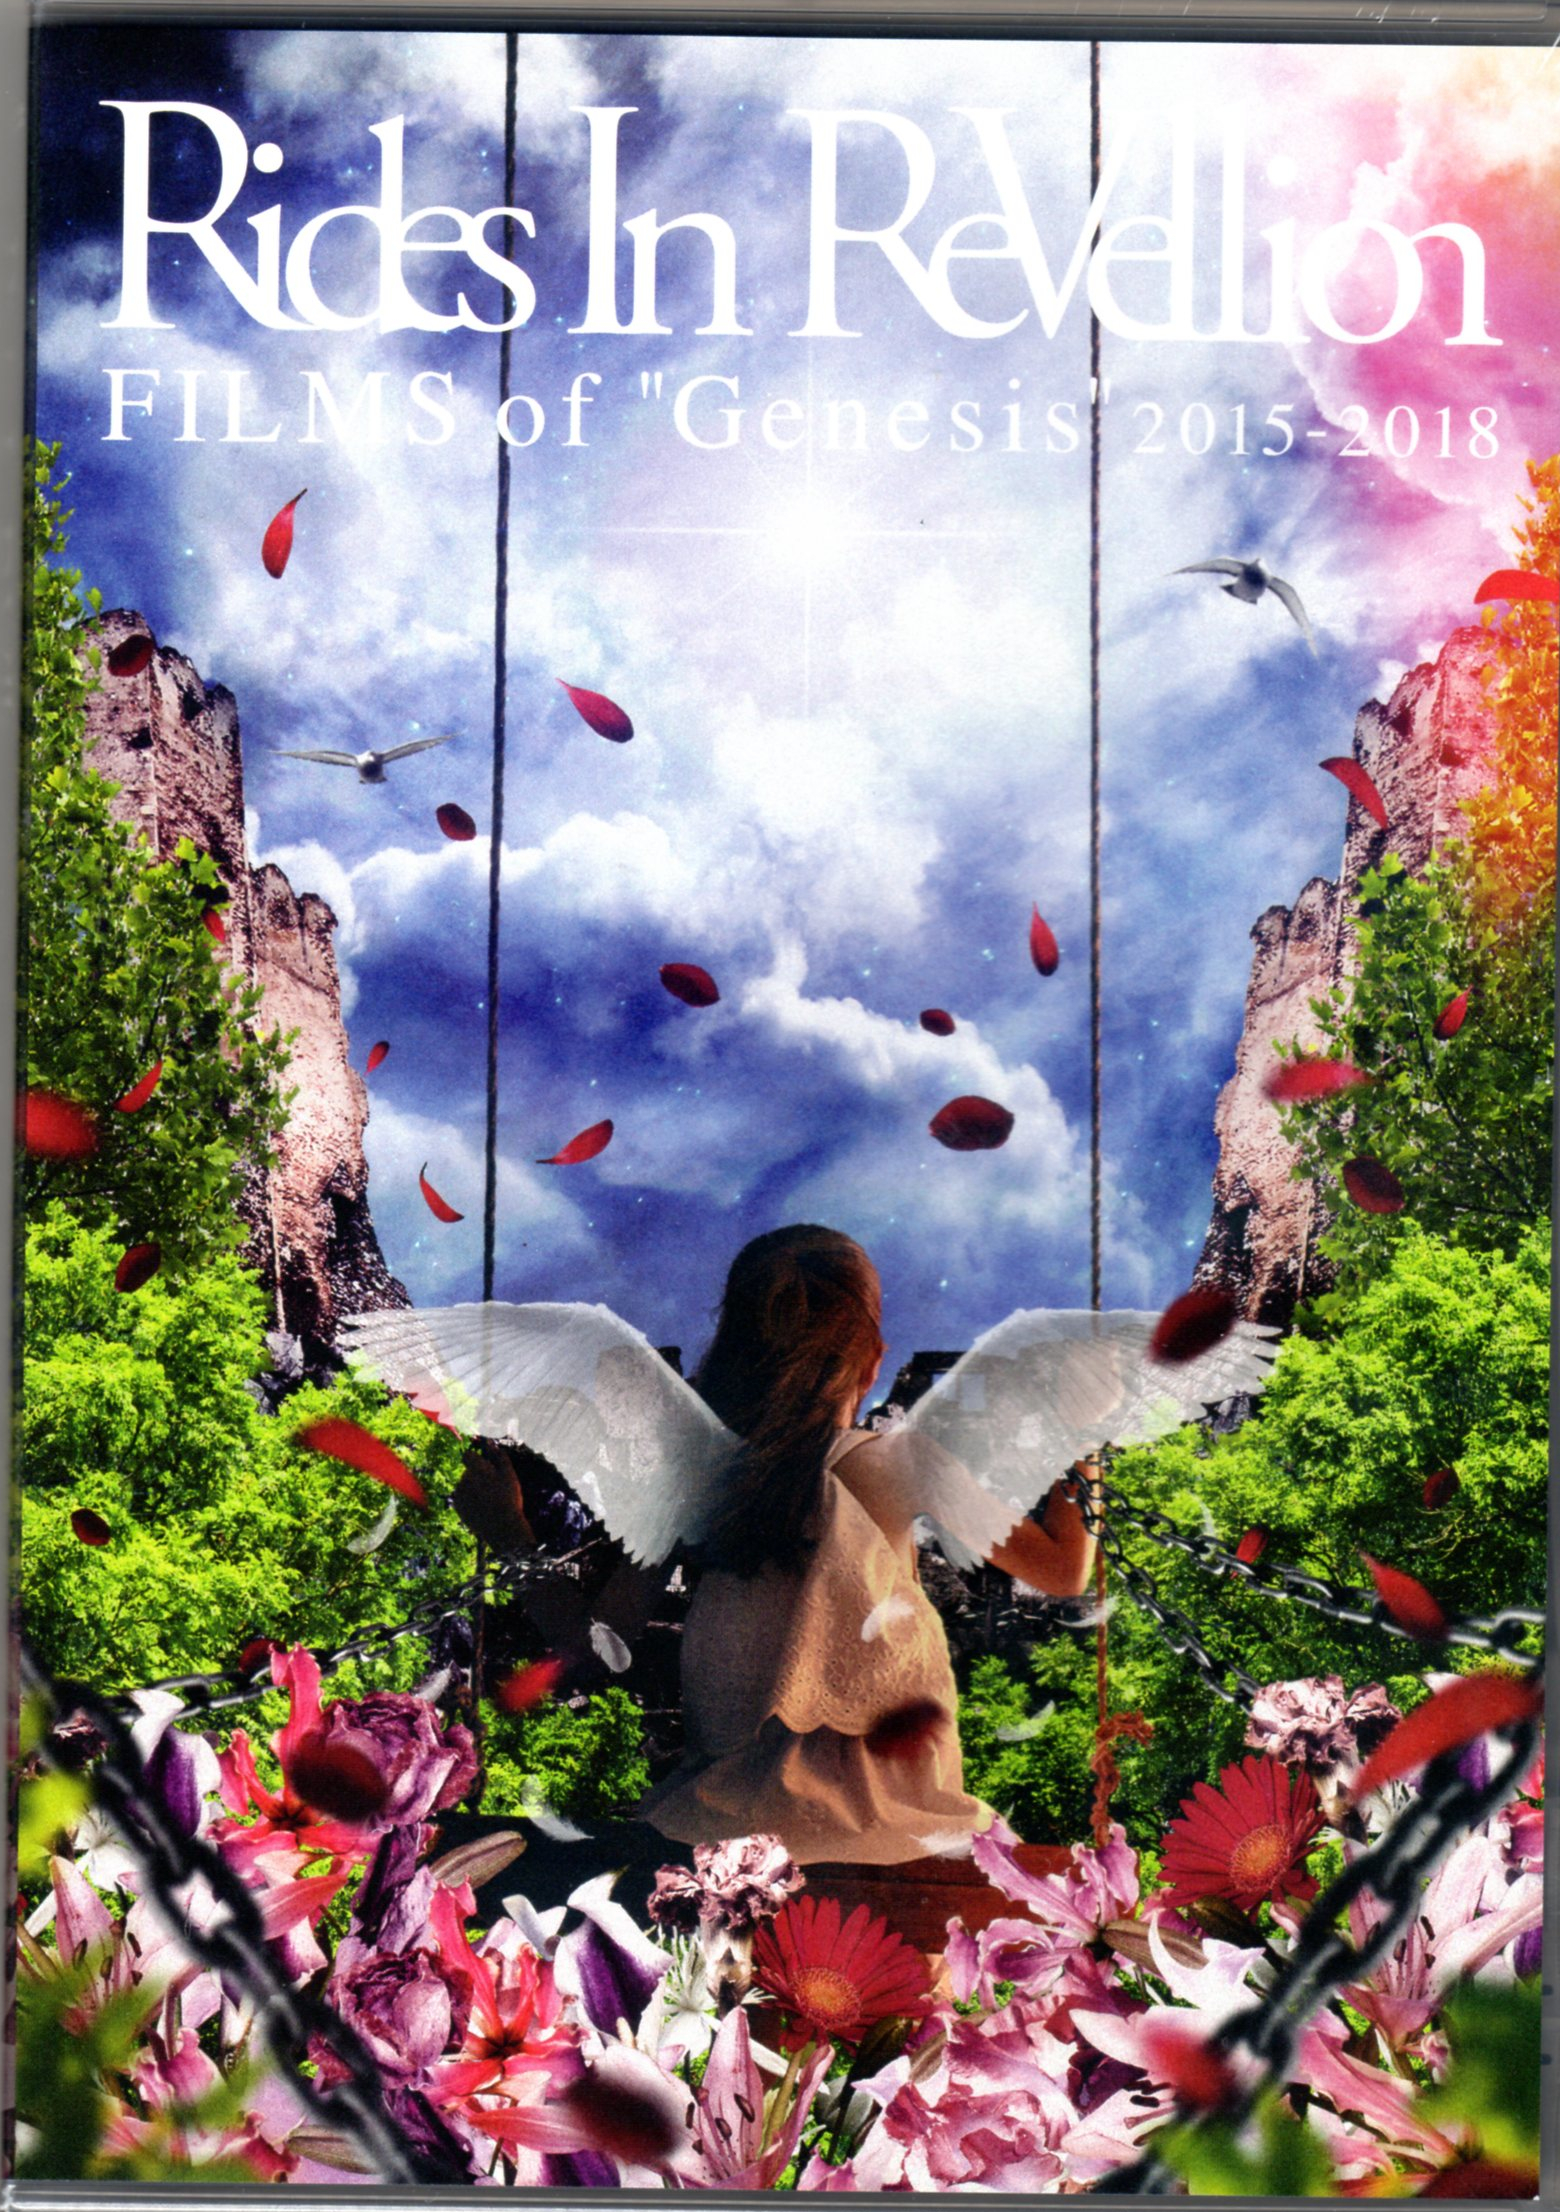 Rides In ReVellion ( ライズインリベリオン )  の DVD FILMS of “Genesis” 2015-2018